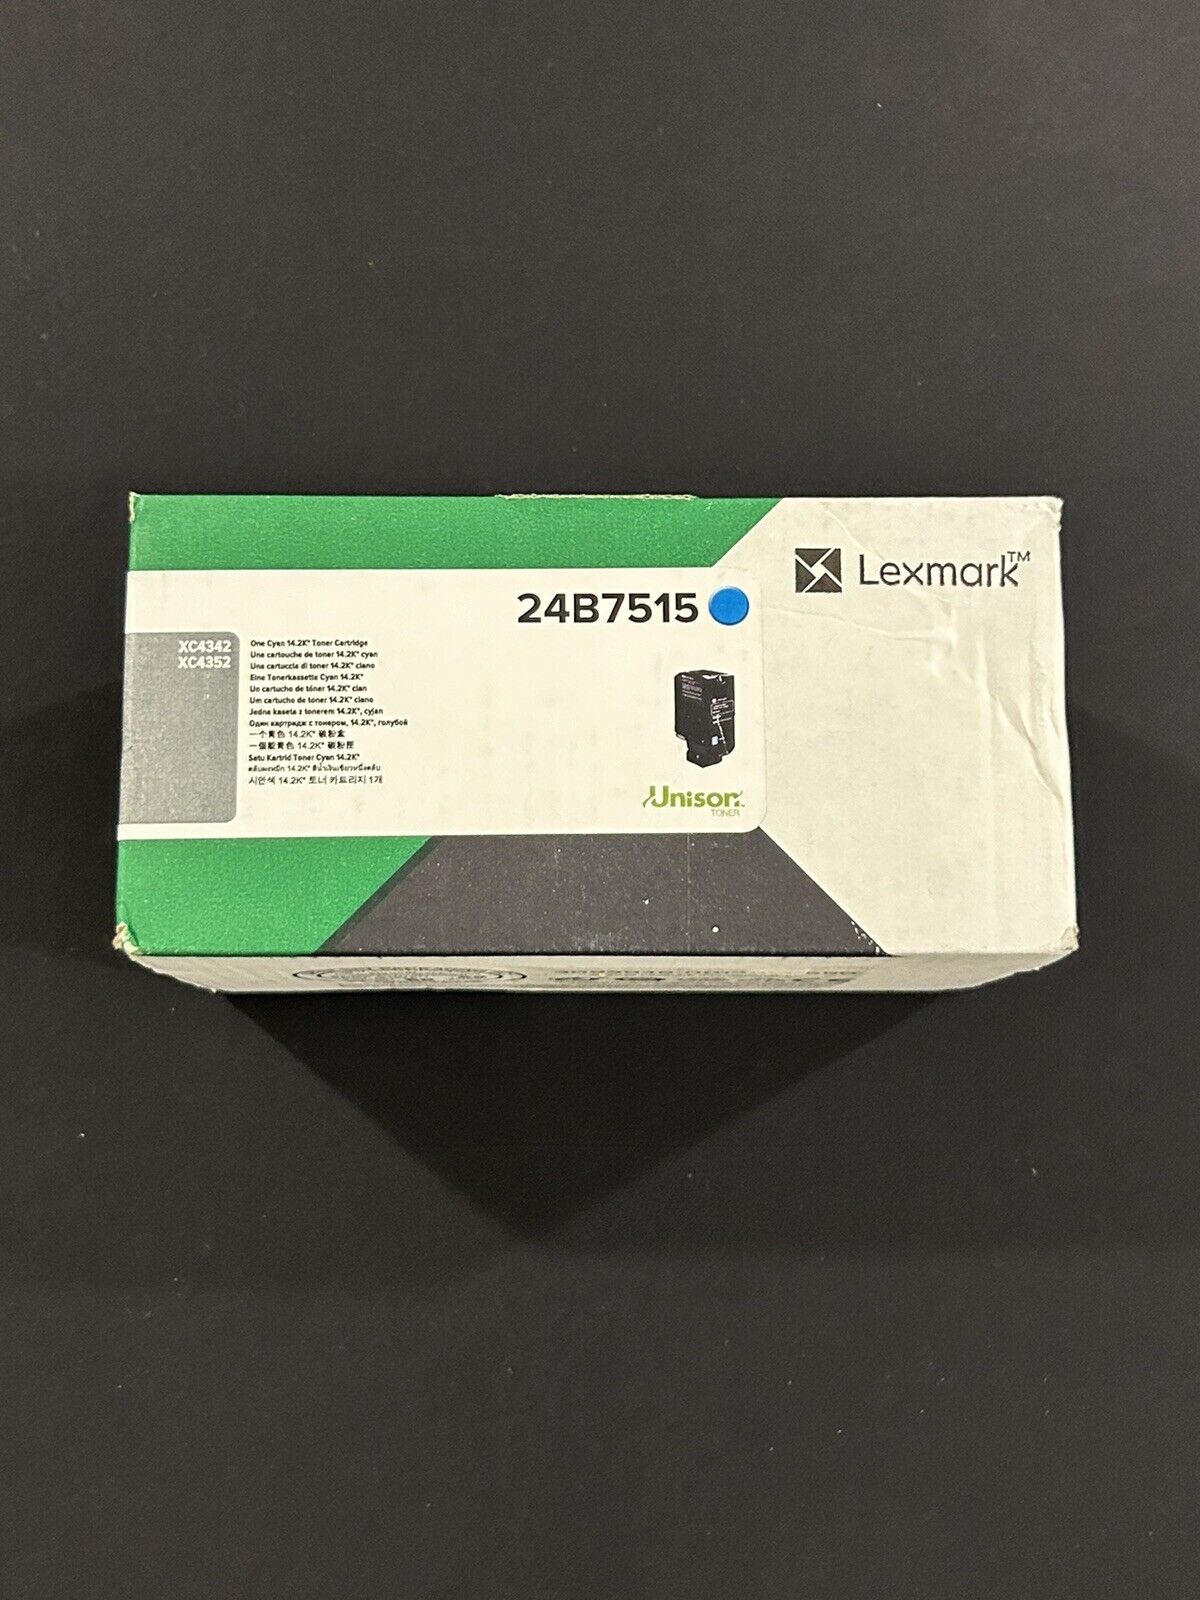 Genuine LEXMARK 24B7515 CYAN TONER Cartridge for XC4342, XC4352. New, Sealed.